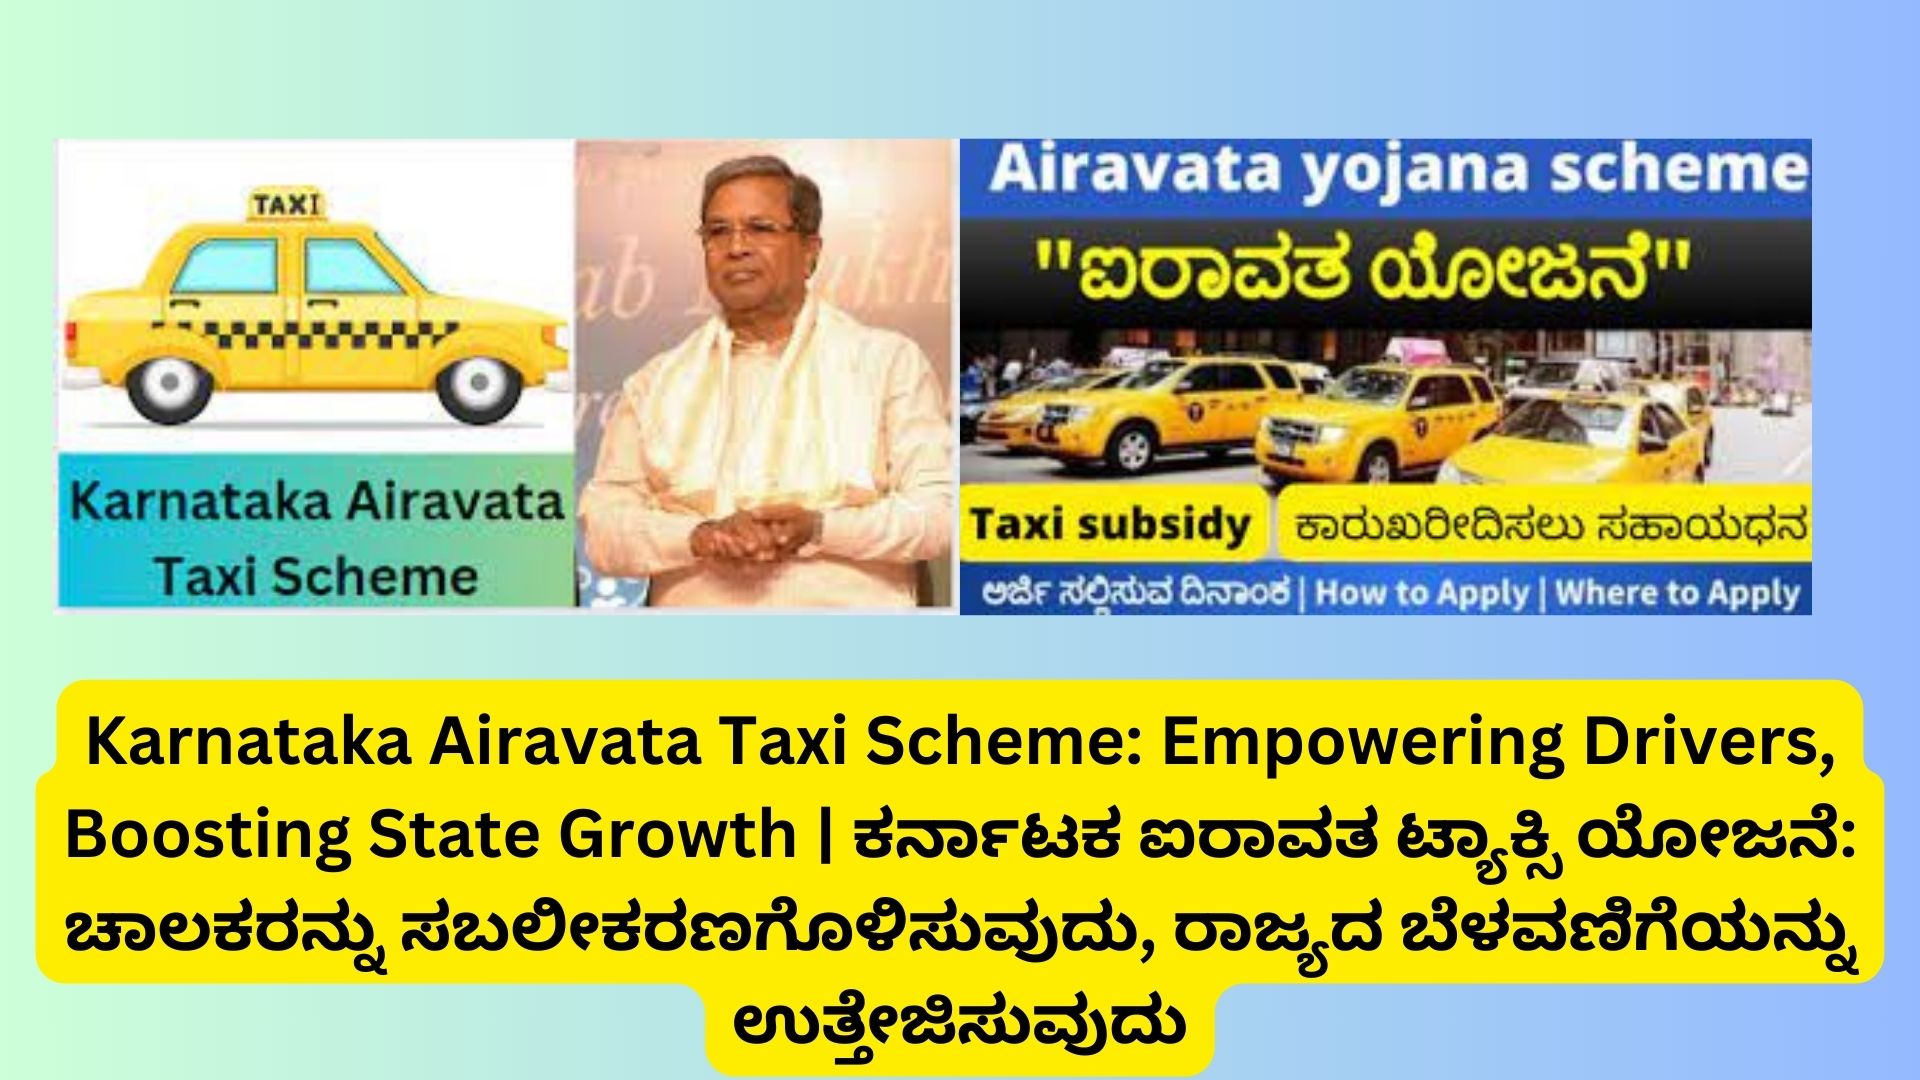 Karnataka Airavata Taxi Scheme: Empowering Drivers, Boosting State Growth | ಕರ್ನಾಟಕ ಐರಾವತ ಟ್ಯಾಕ್ಸಿ ಯೋಜನೆ: ಚಾಲಕರನ್ನು ಸಬಲೀಕರಣಗೊಳಿಸುವುದು, ರಾಜ್ಯದ ಬೆಳವಣಿಗೆಯನ್ನು ಉತ್ತೇಜಿಸುವುದು